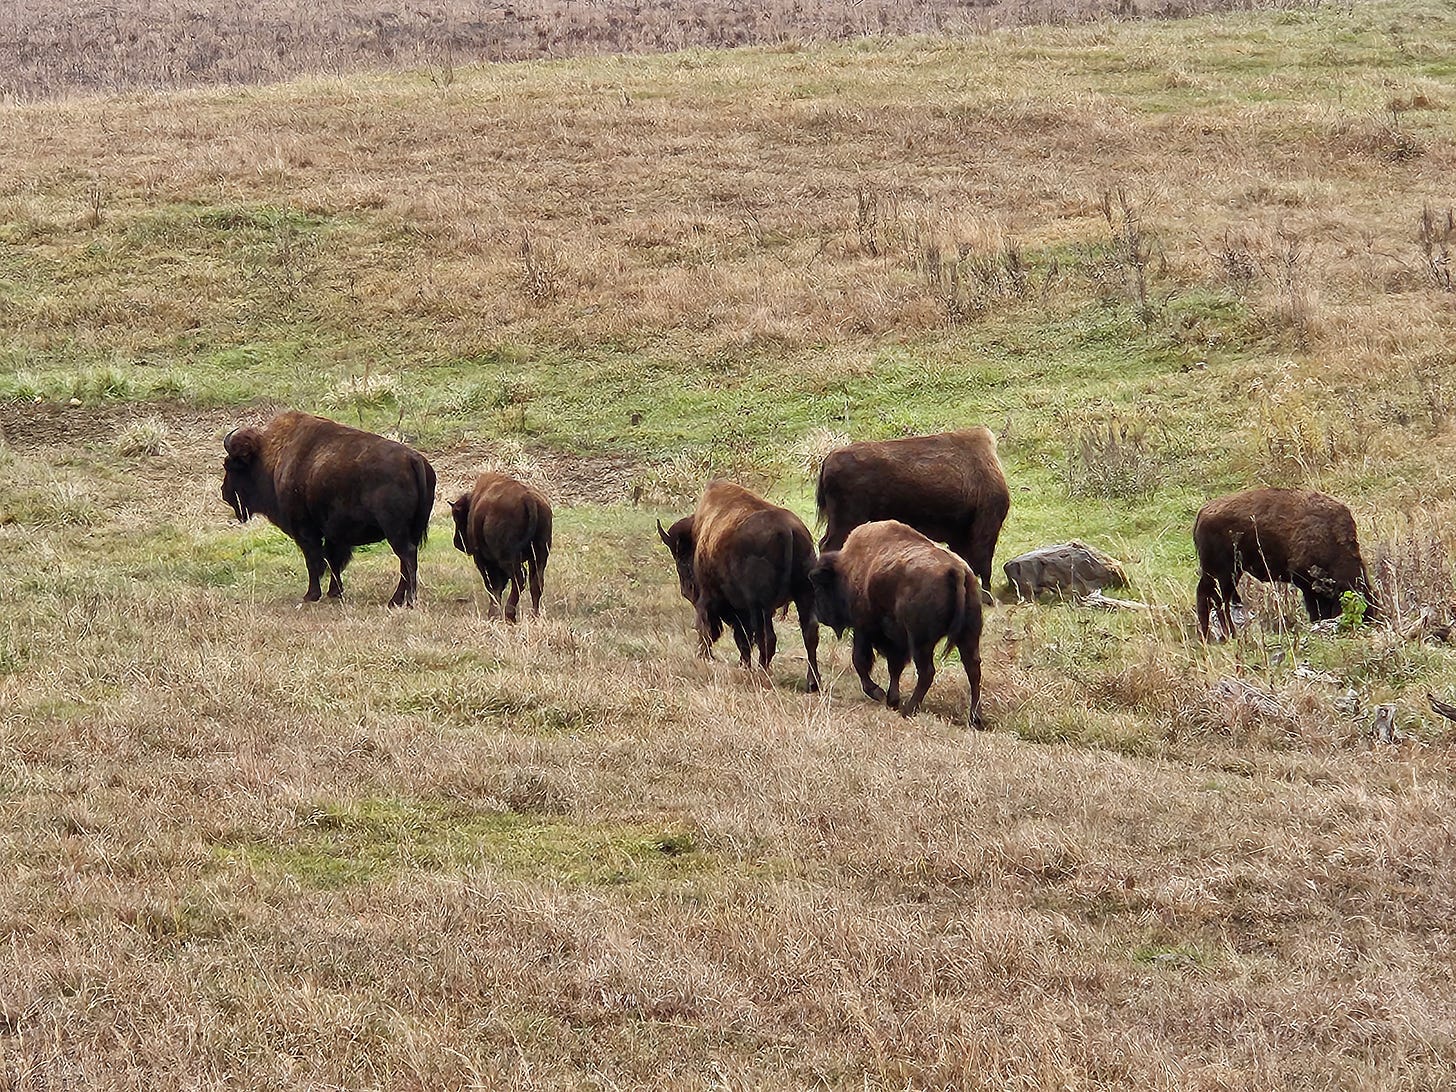 Six bison (American buffalo), including one calf, walk through prairie grassland.